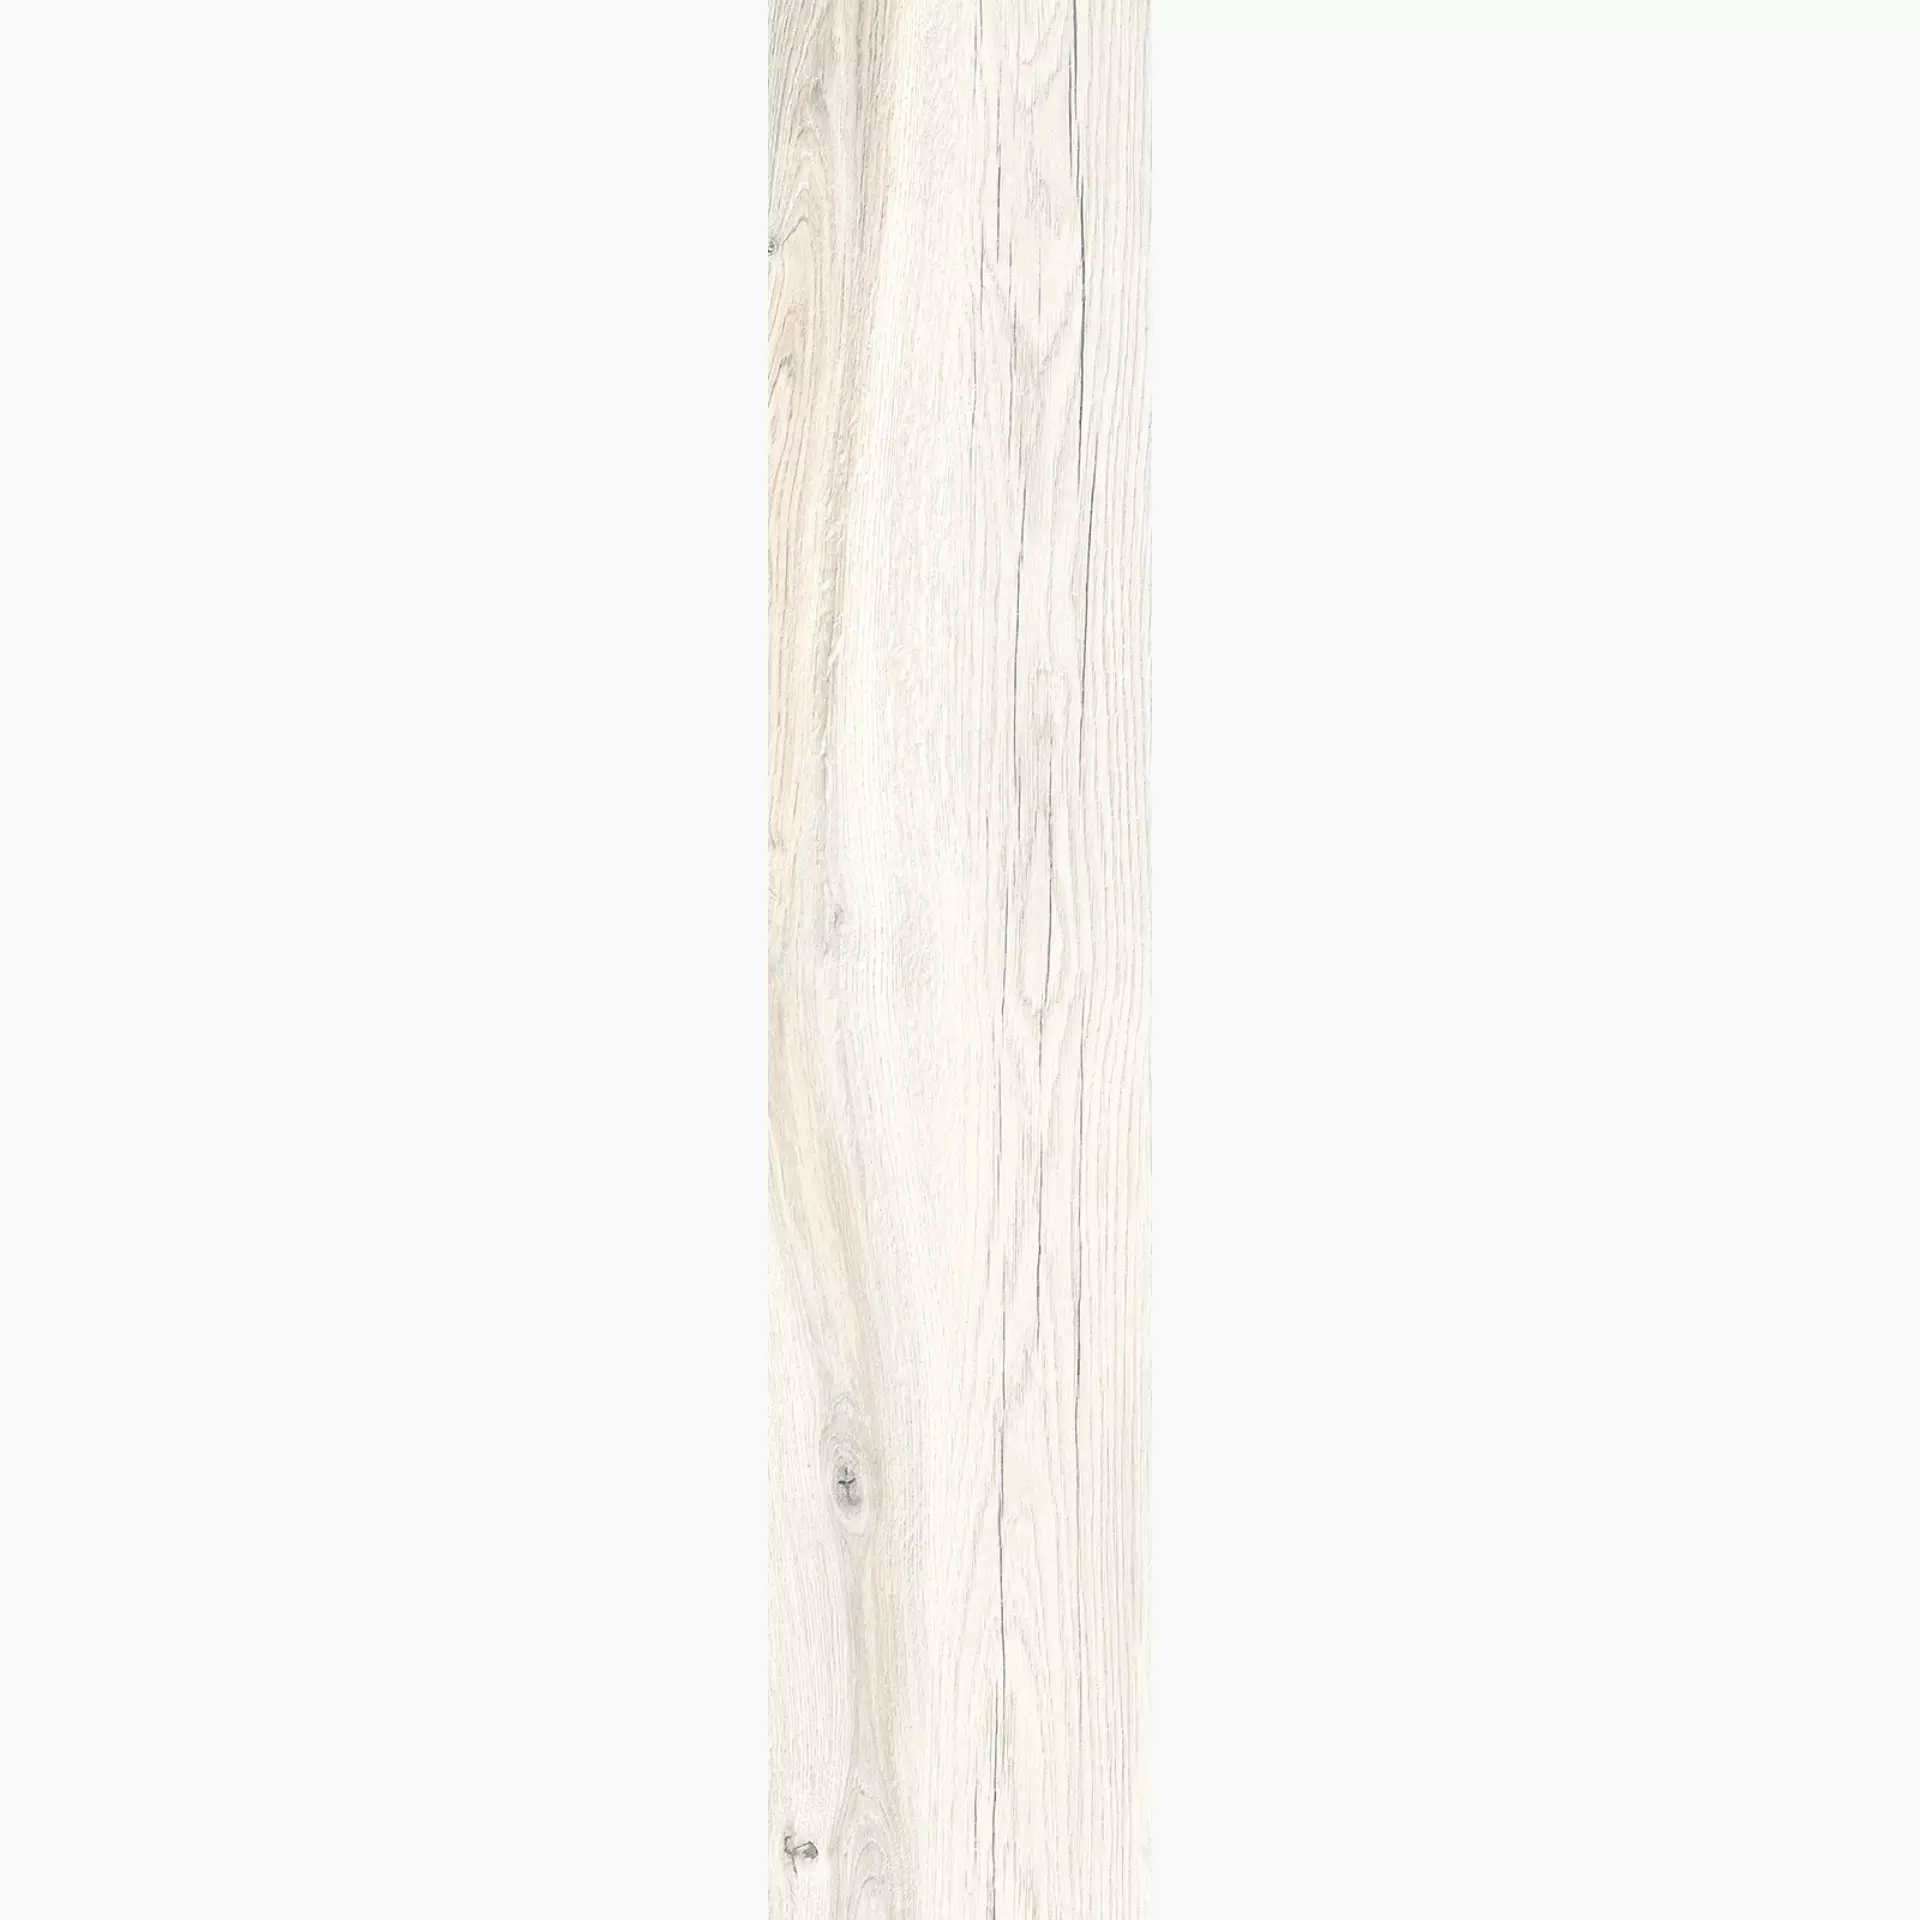 Rondine Daring Ivory Naturale J88443 24x120cm 9,5mm